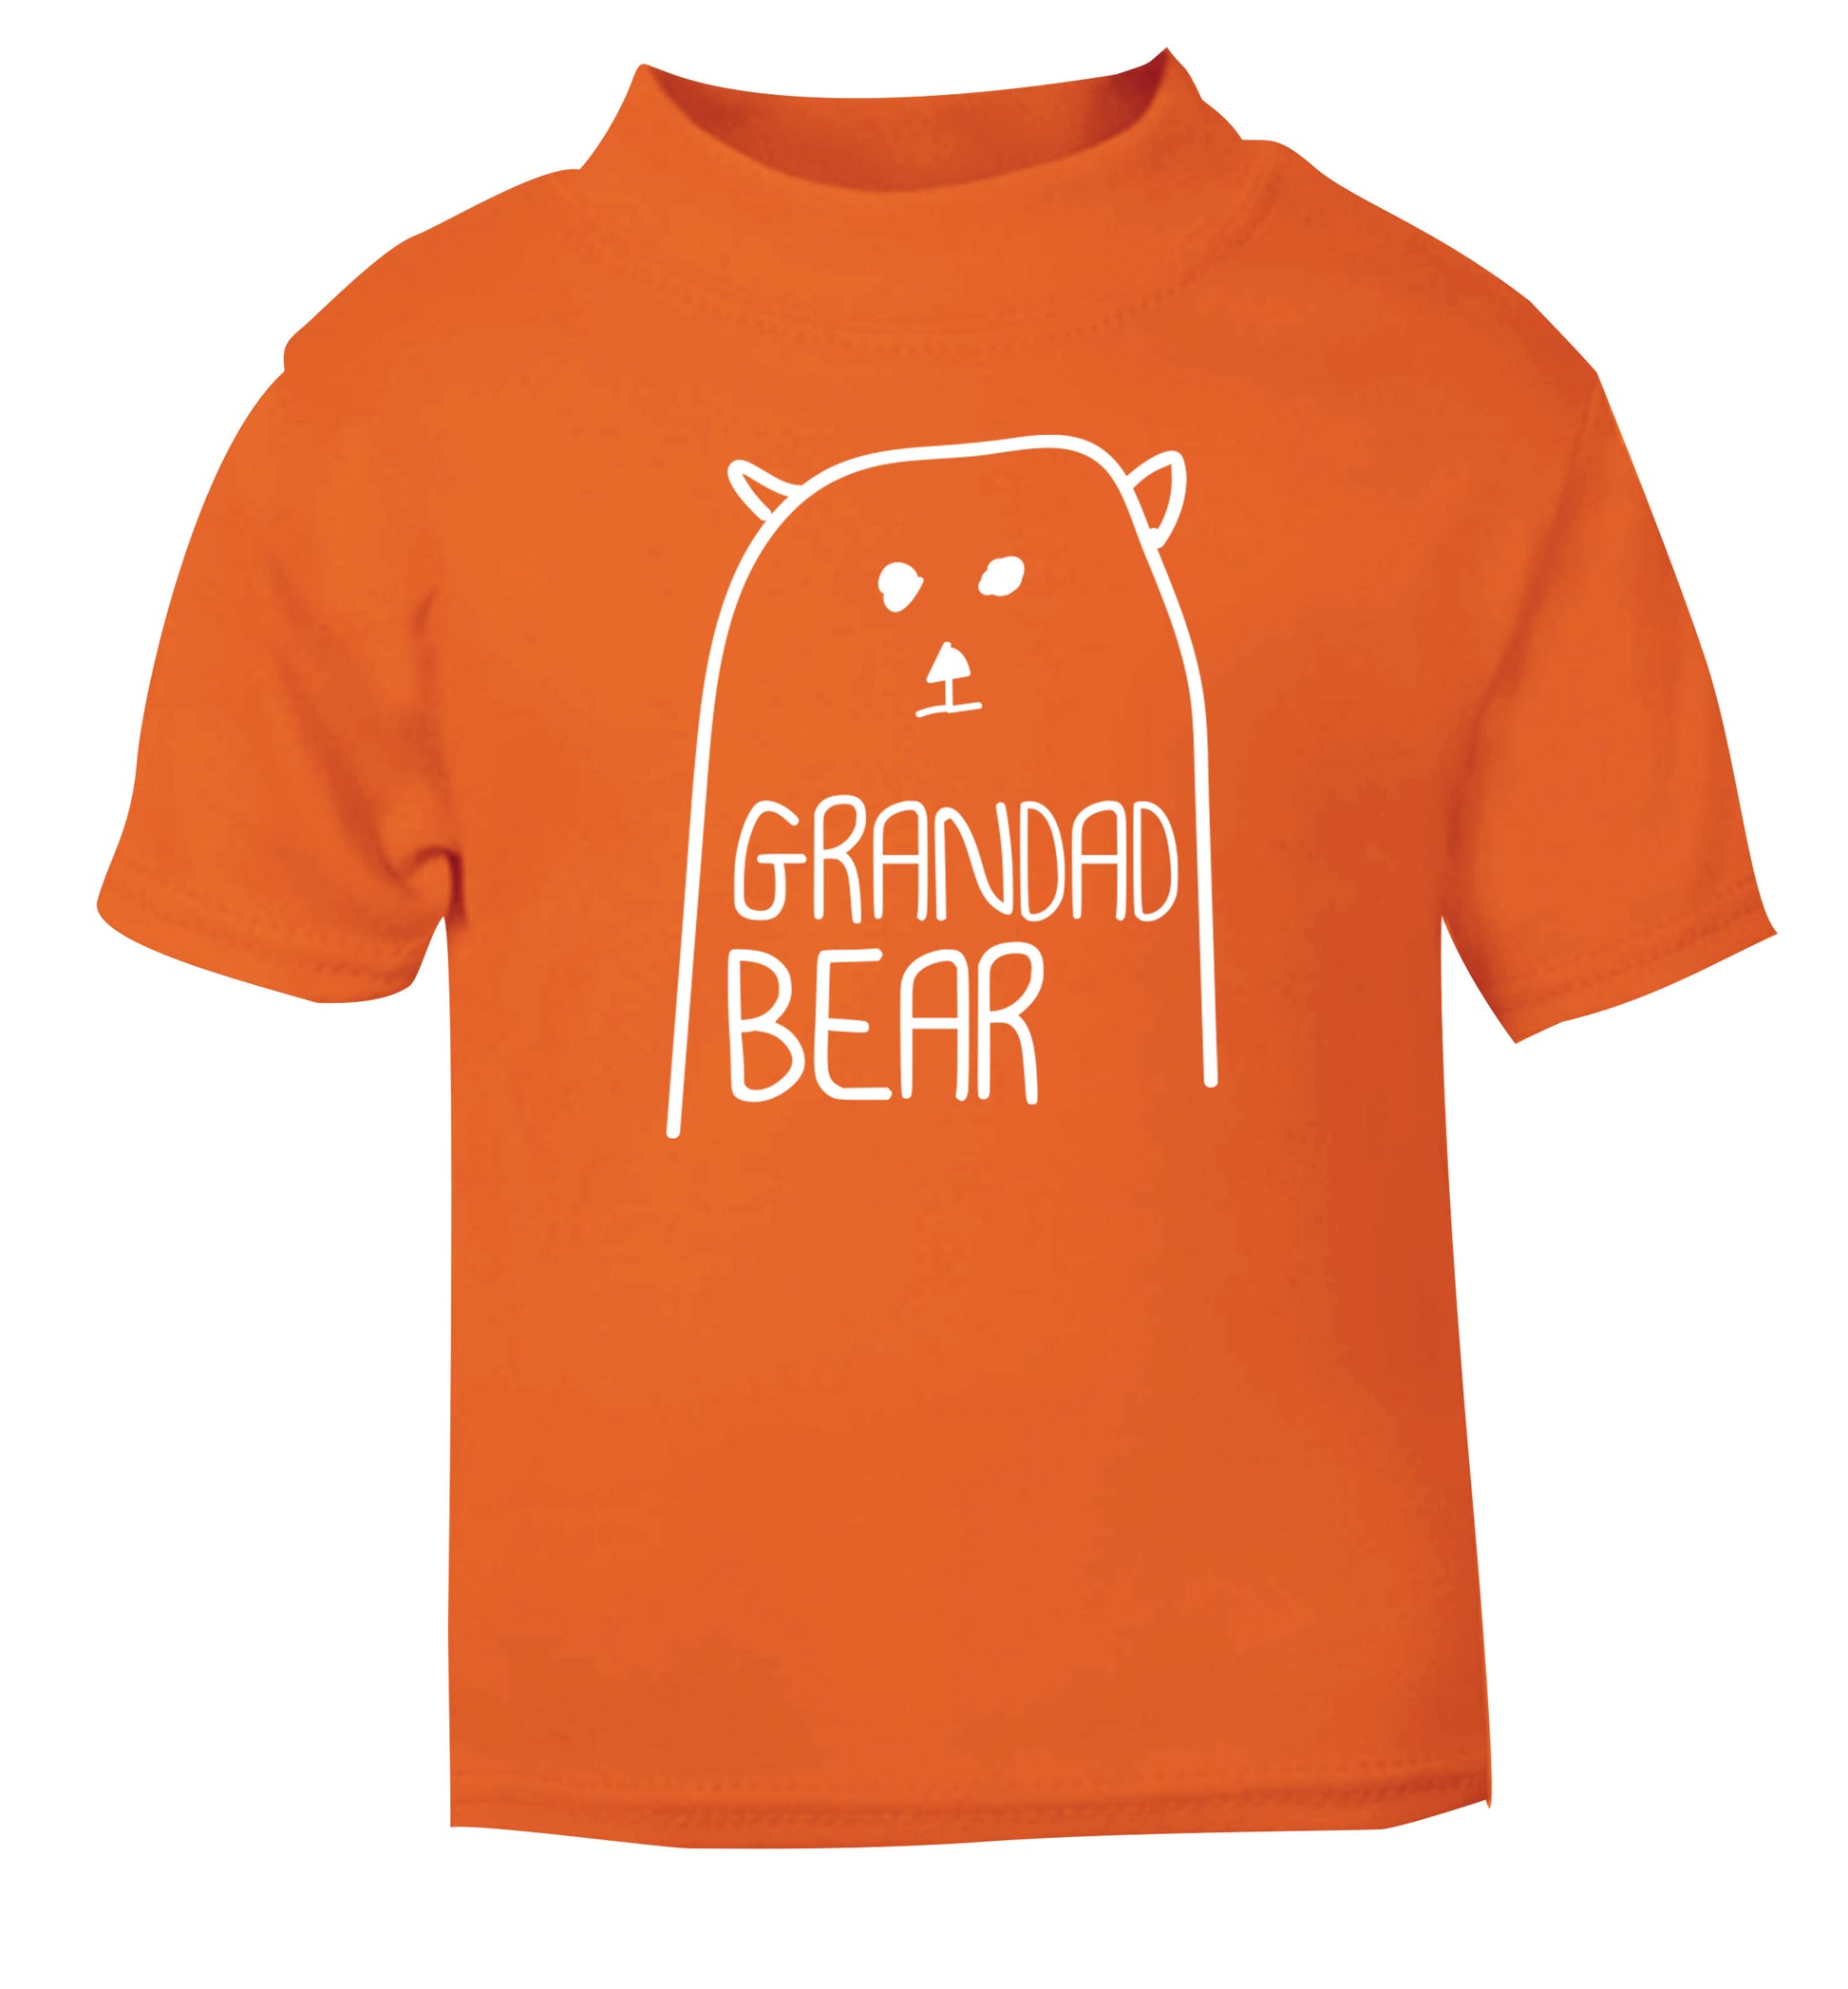 Grandad bear orange Baby Toddler Tshirt 2 Years